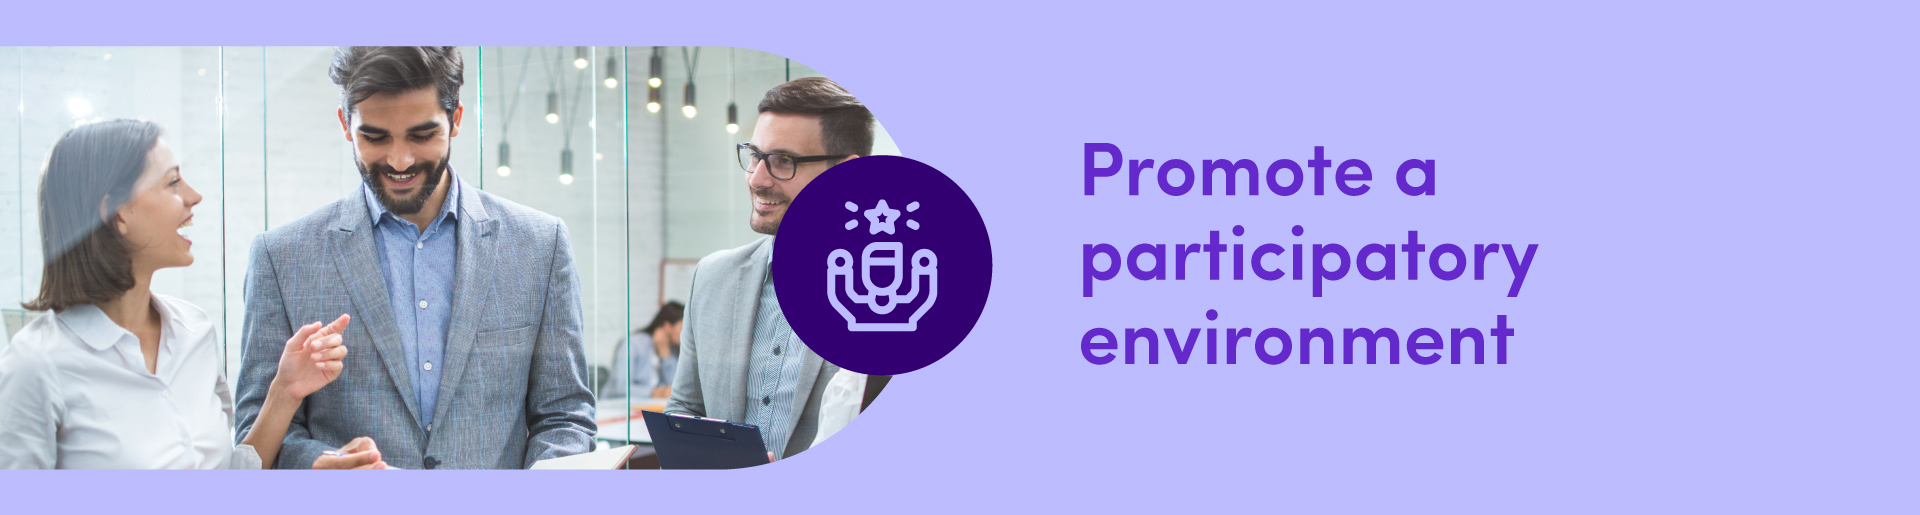 8-Promote-a-participatory-environment